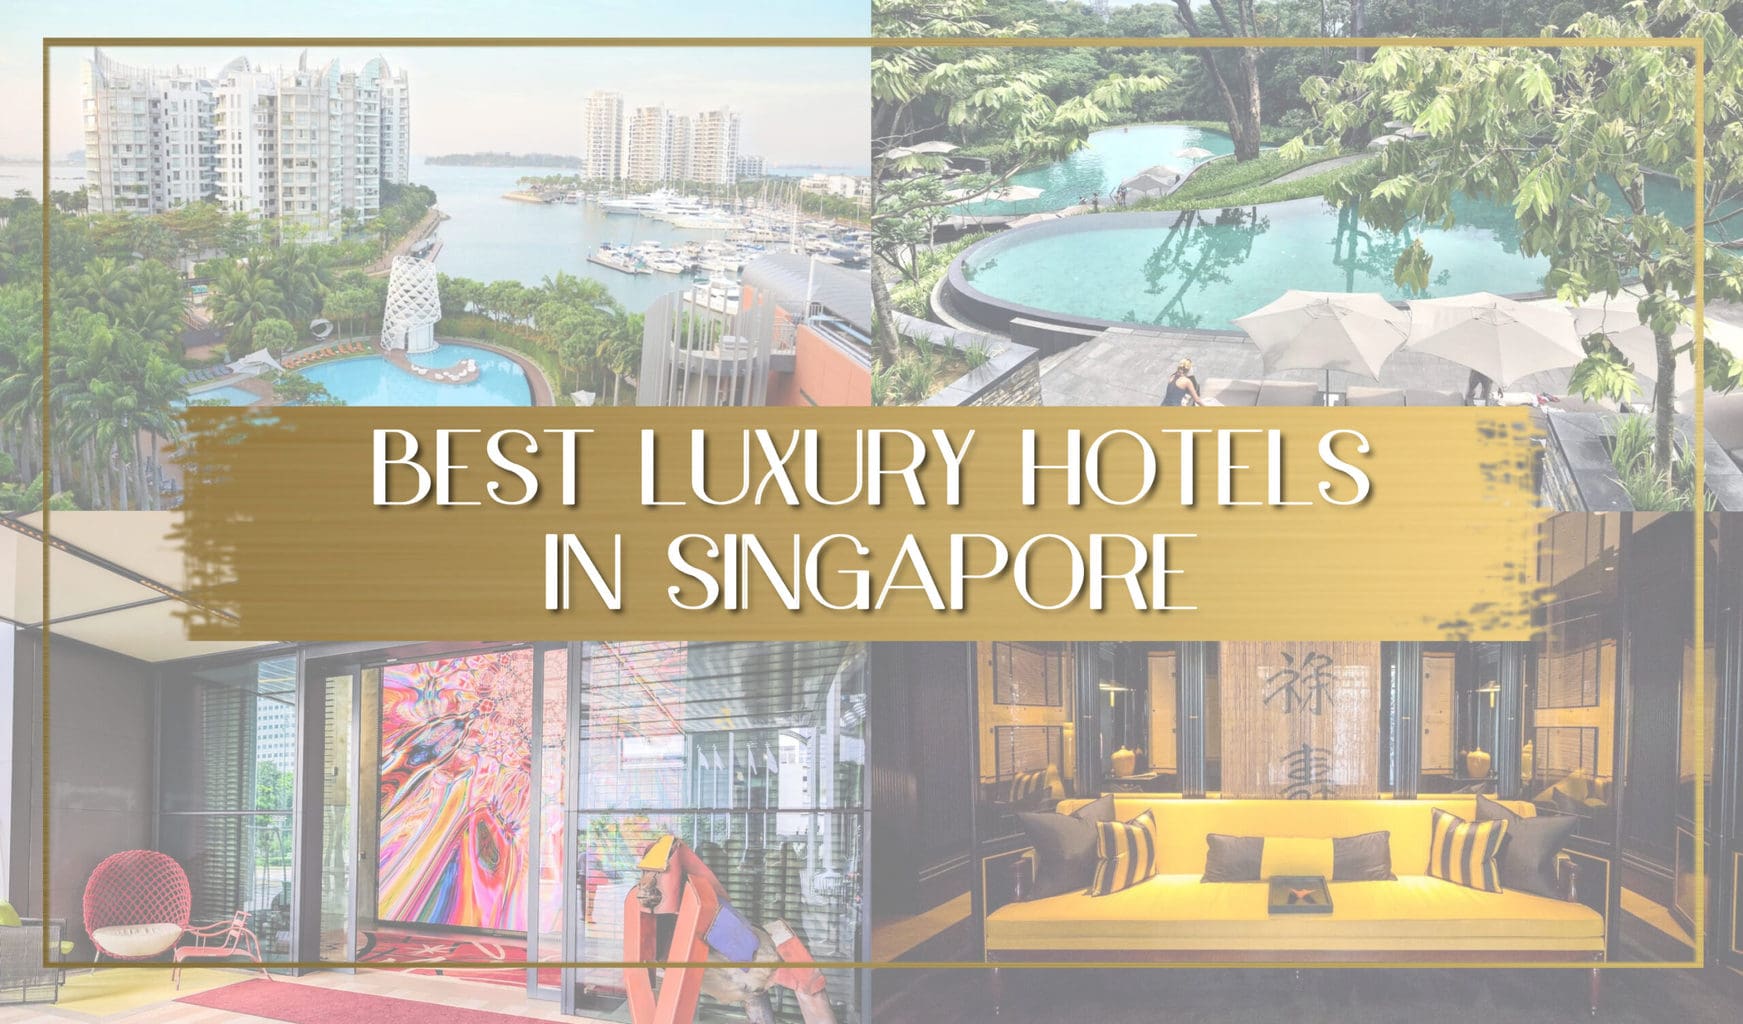 Best luxury hotels in Singapore main